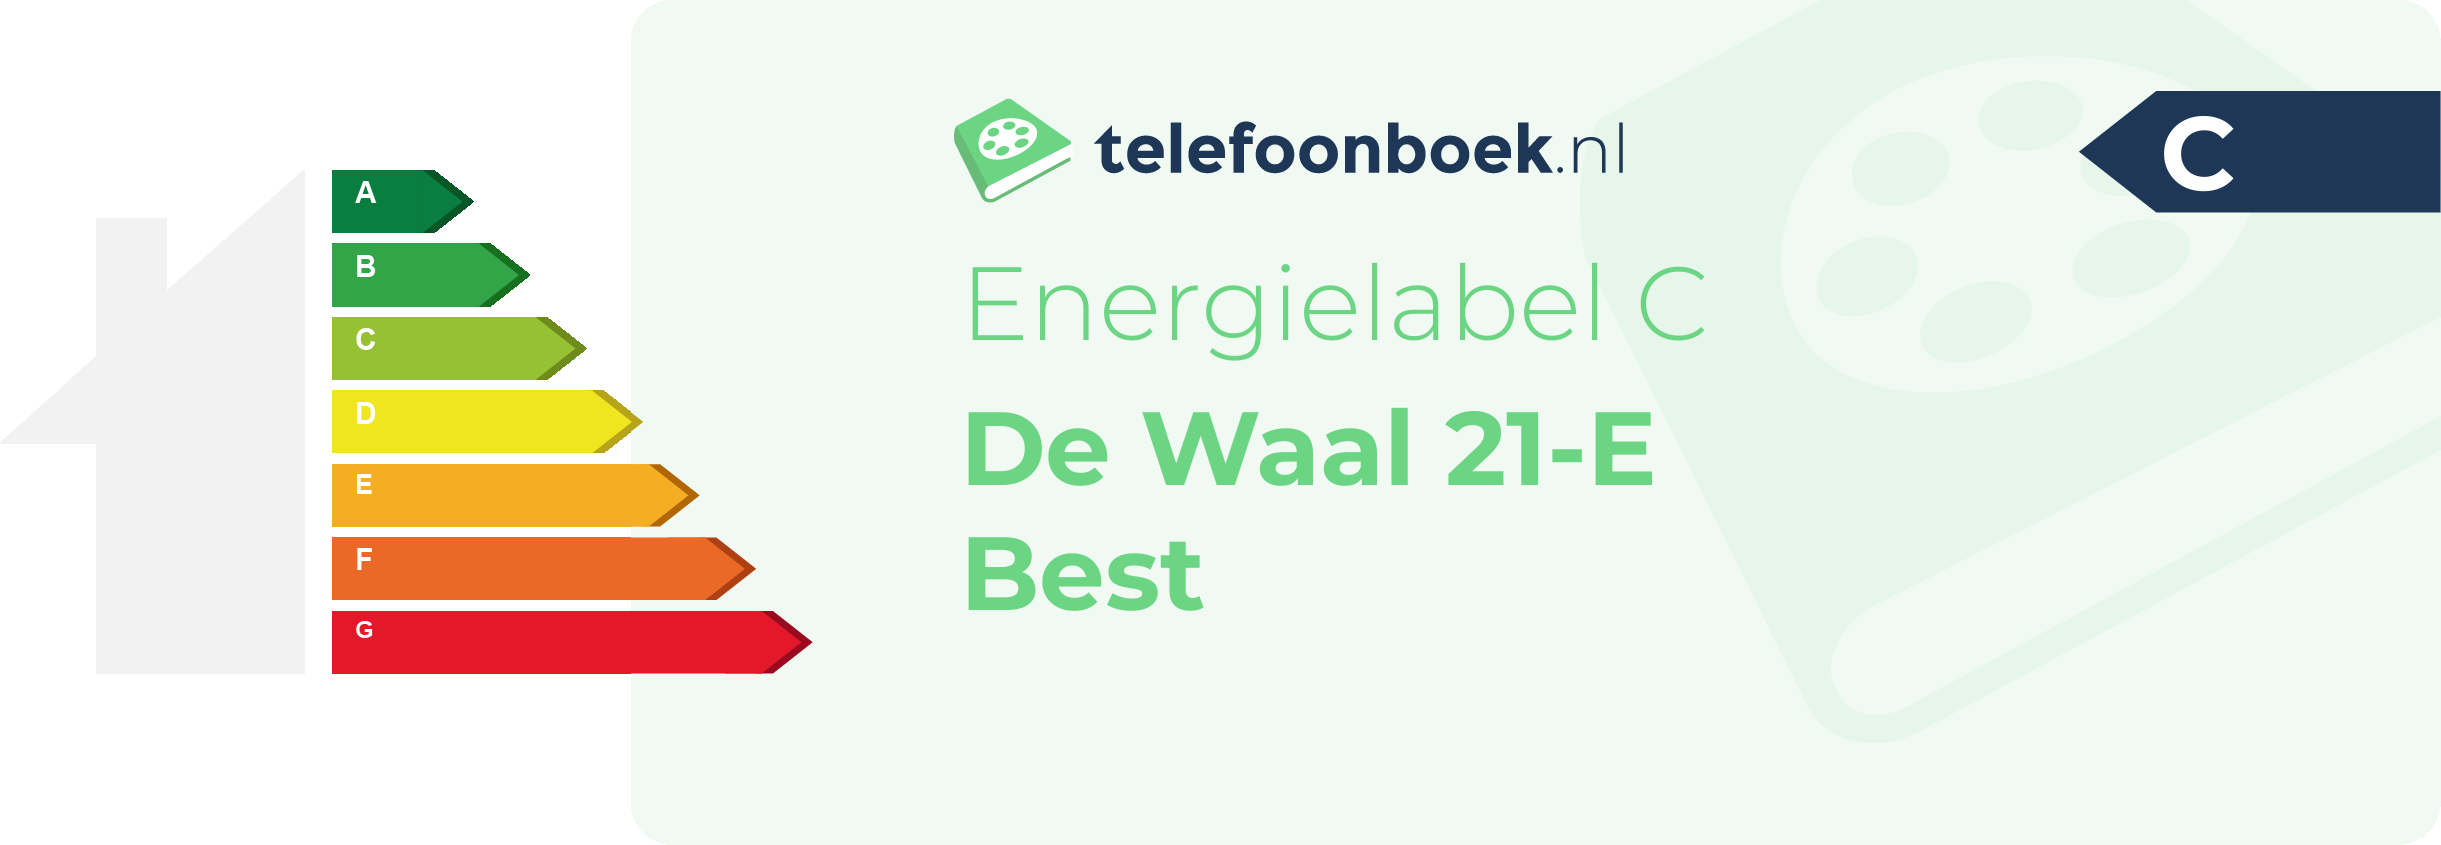 Energielabel De Waal 21-E Best